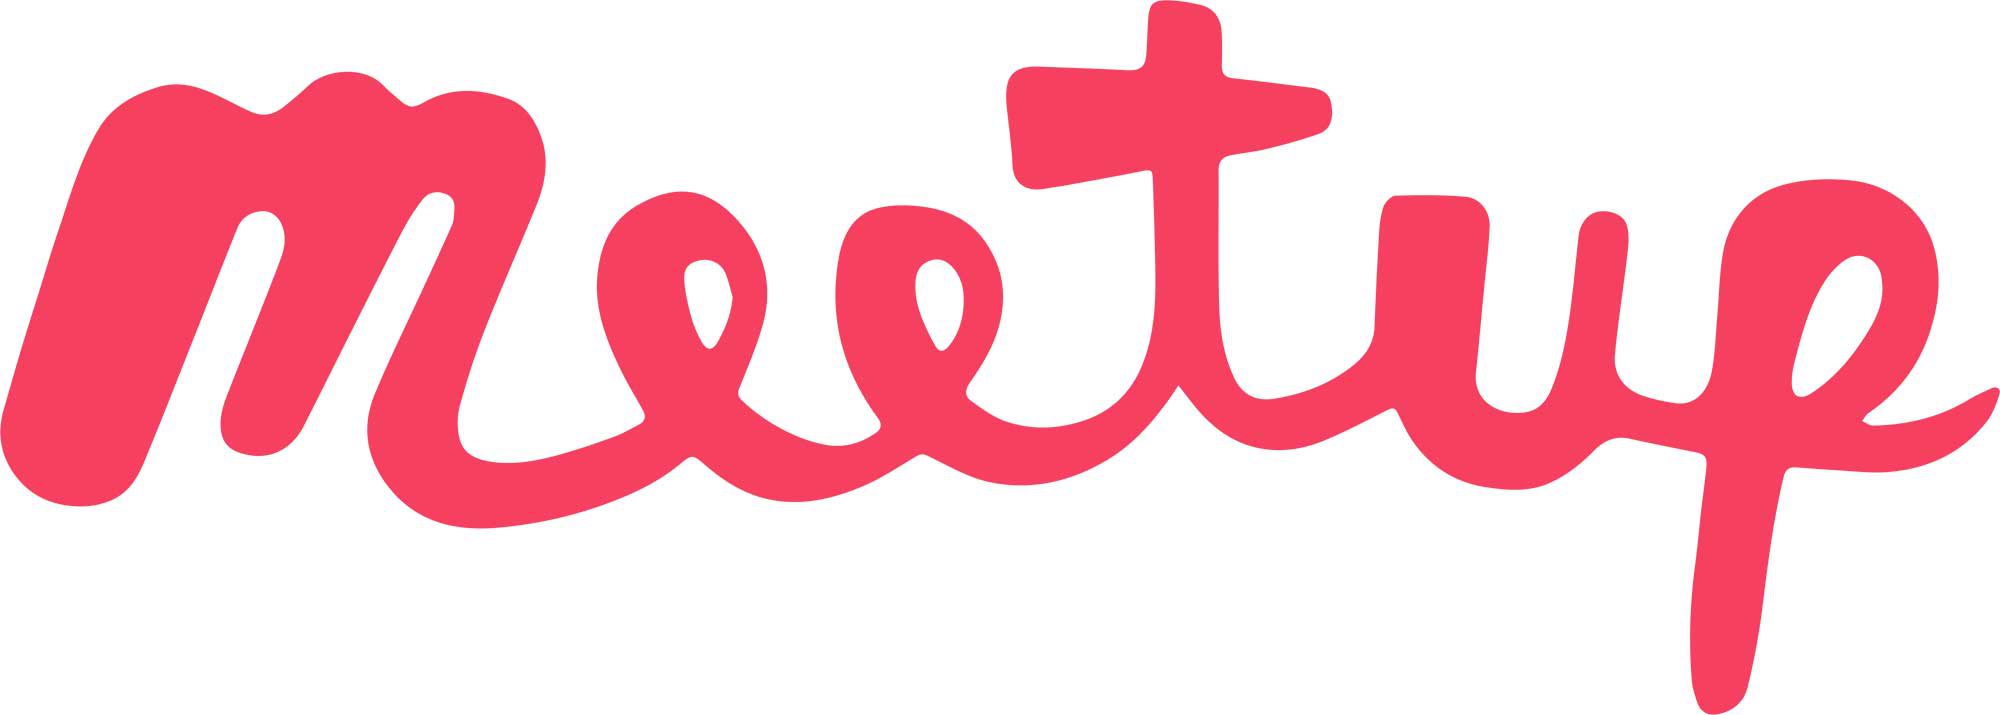 Meetup logo.